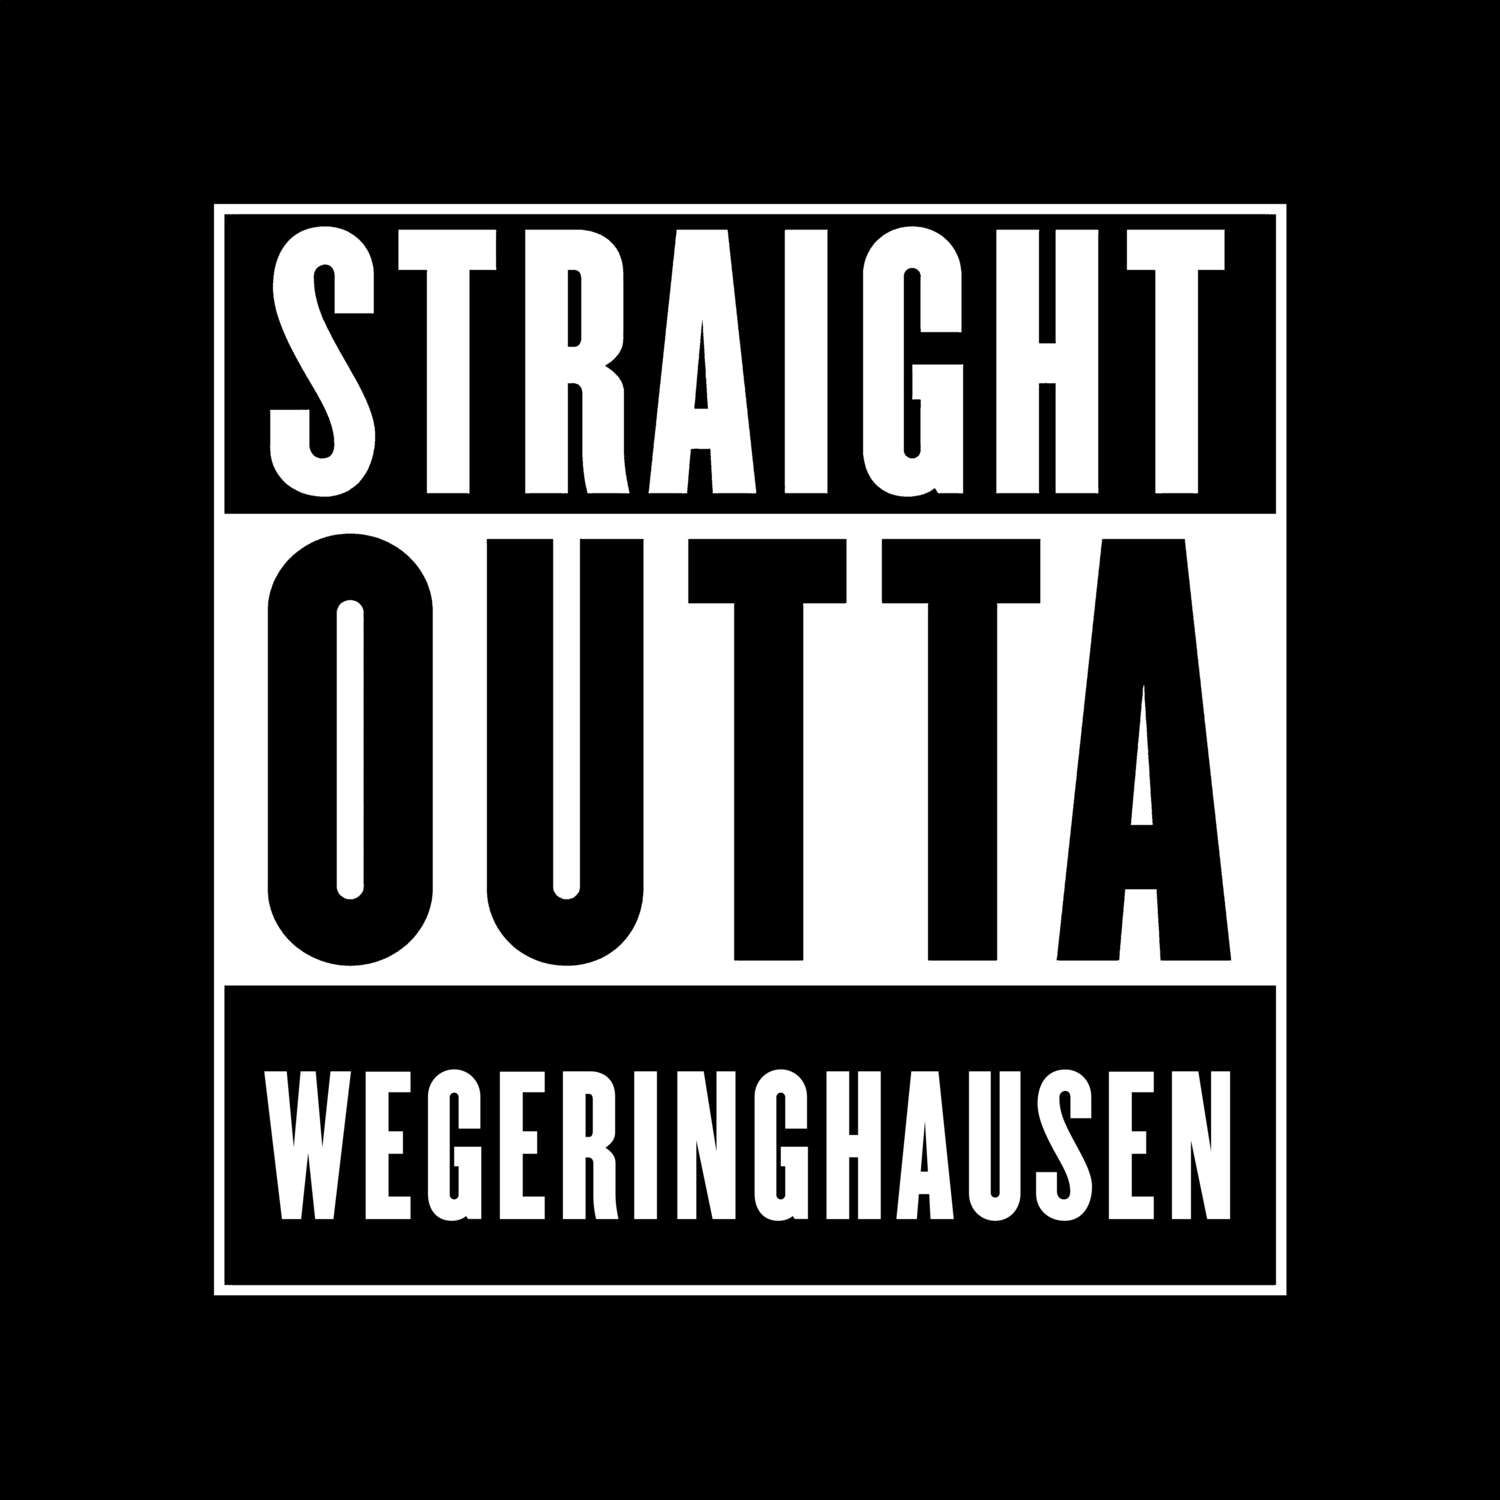 Wegeringhausen T-Shirt »Straight Outta«